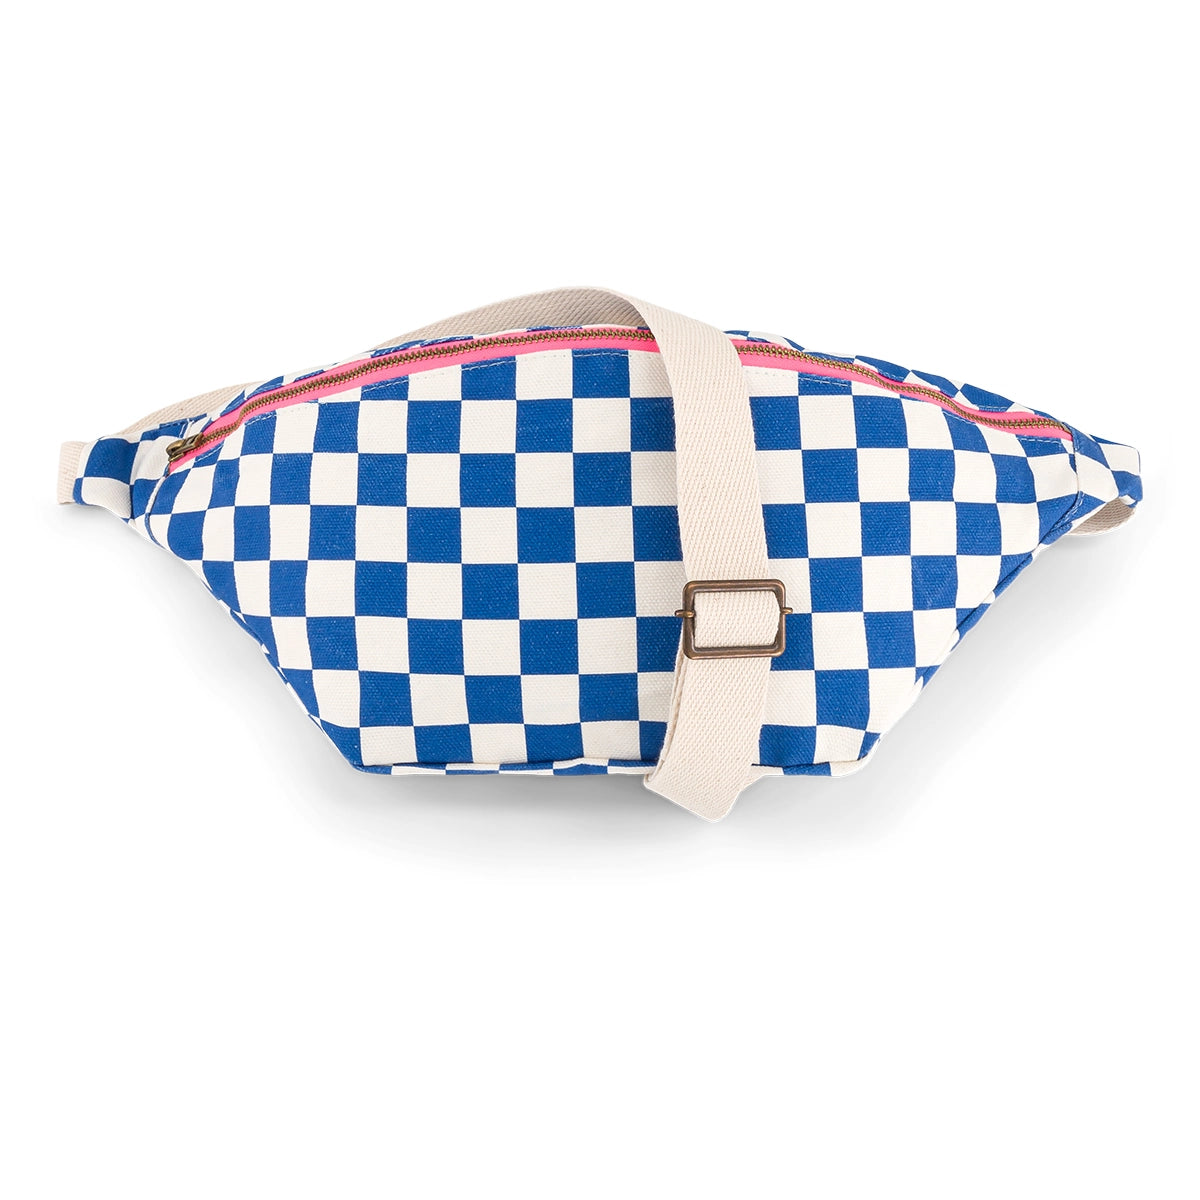 Belt bag - Blue Checkerboard